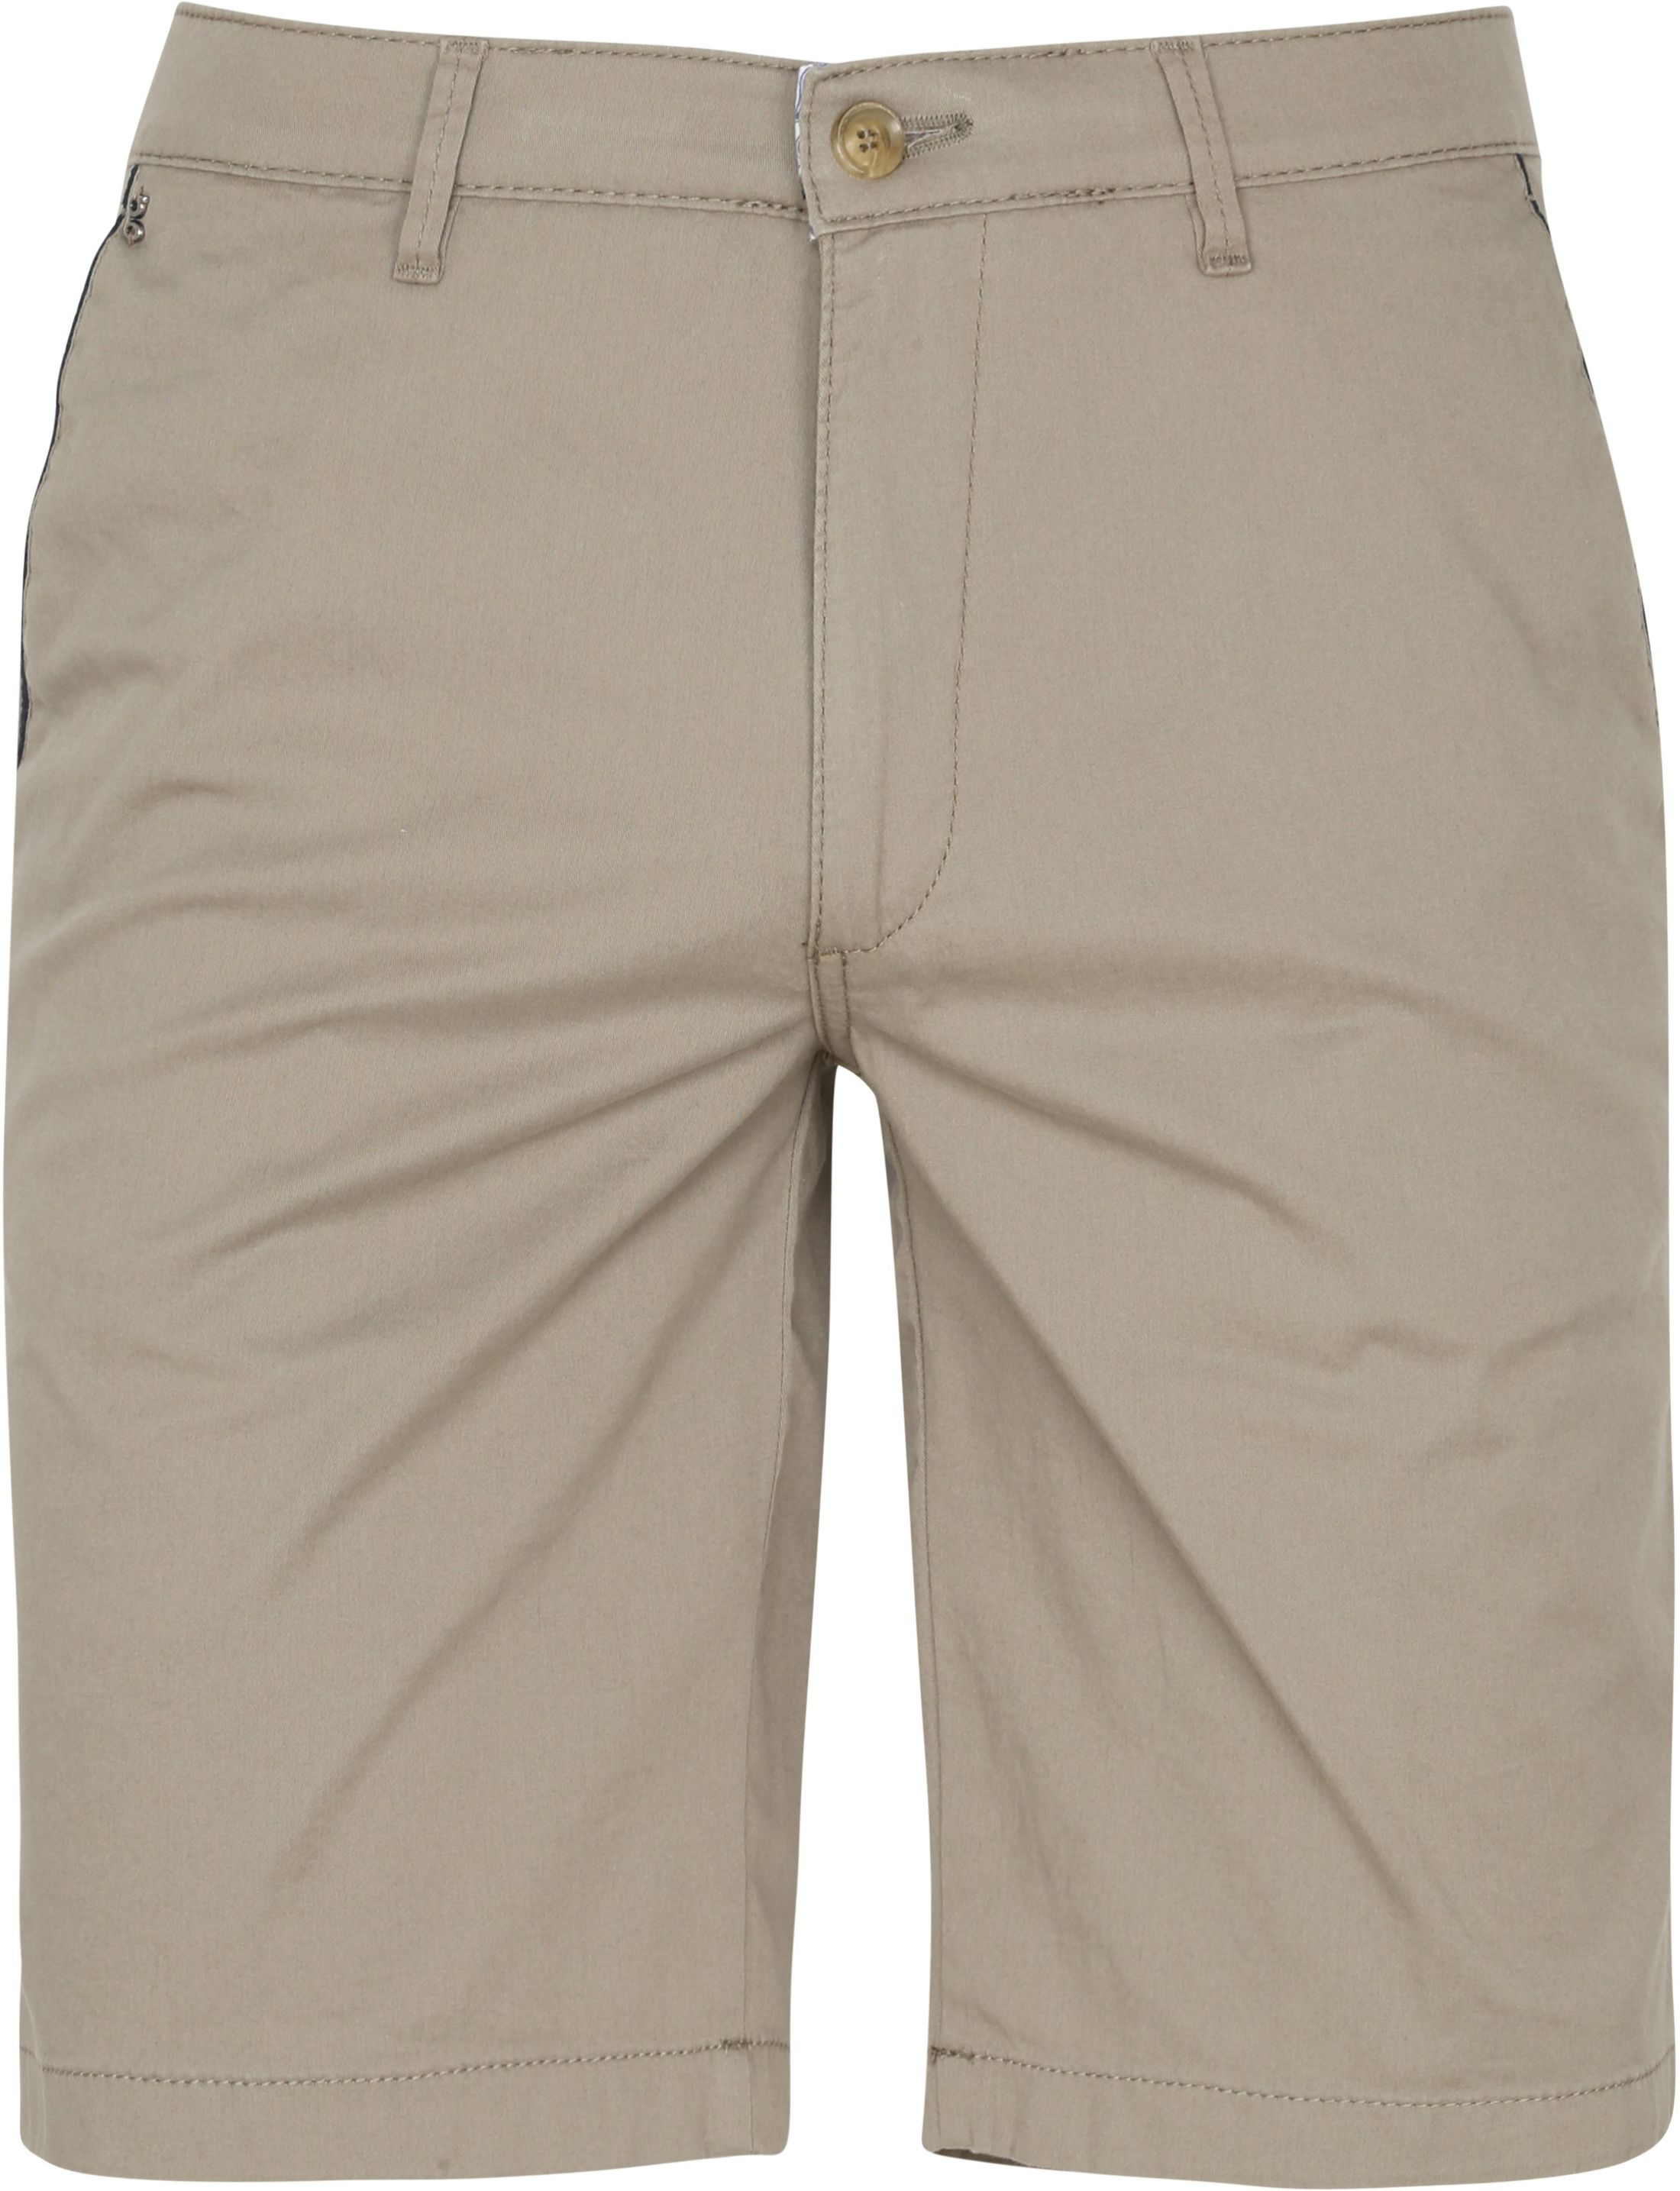 Gardeur Shorts Bermuda Jasper Olive Green size W 32/33